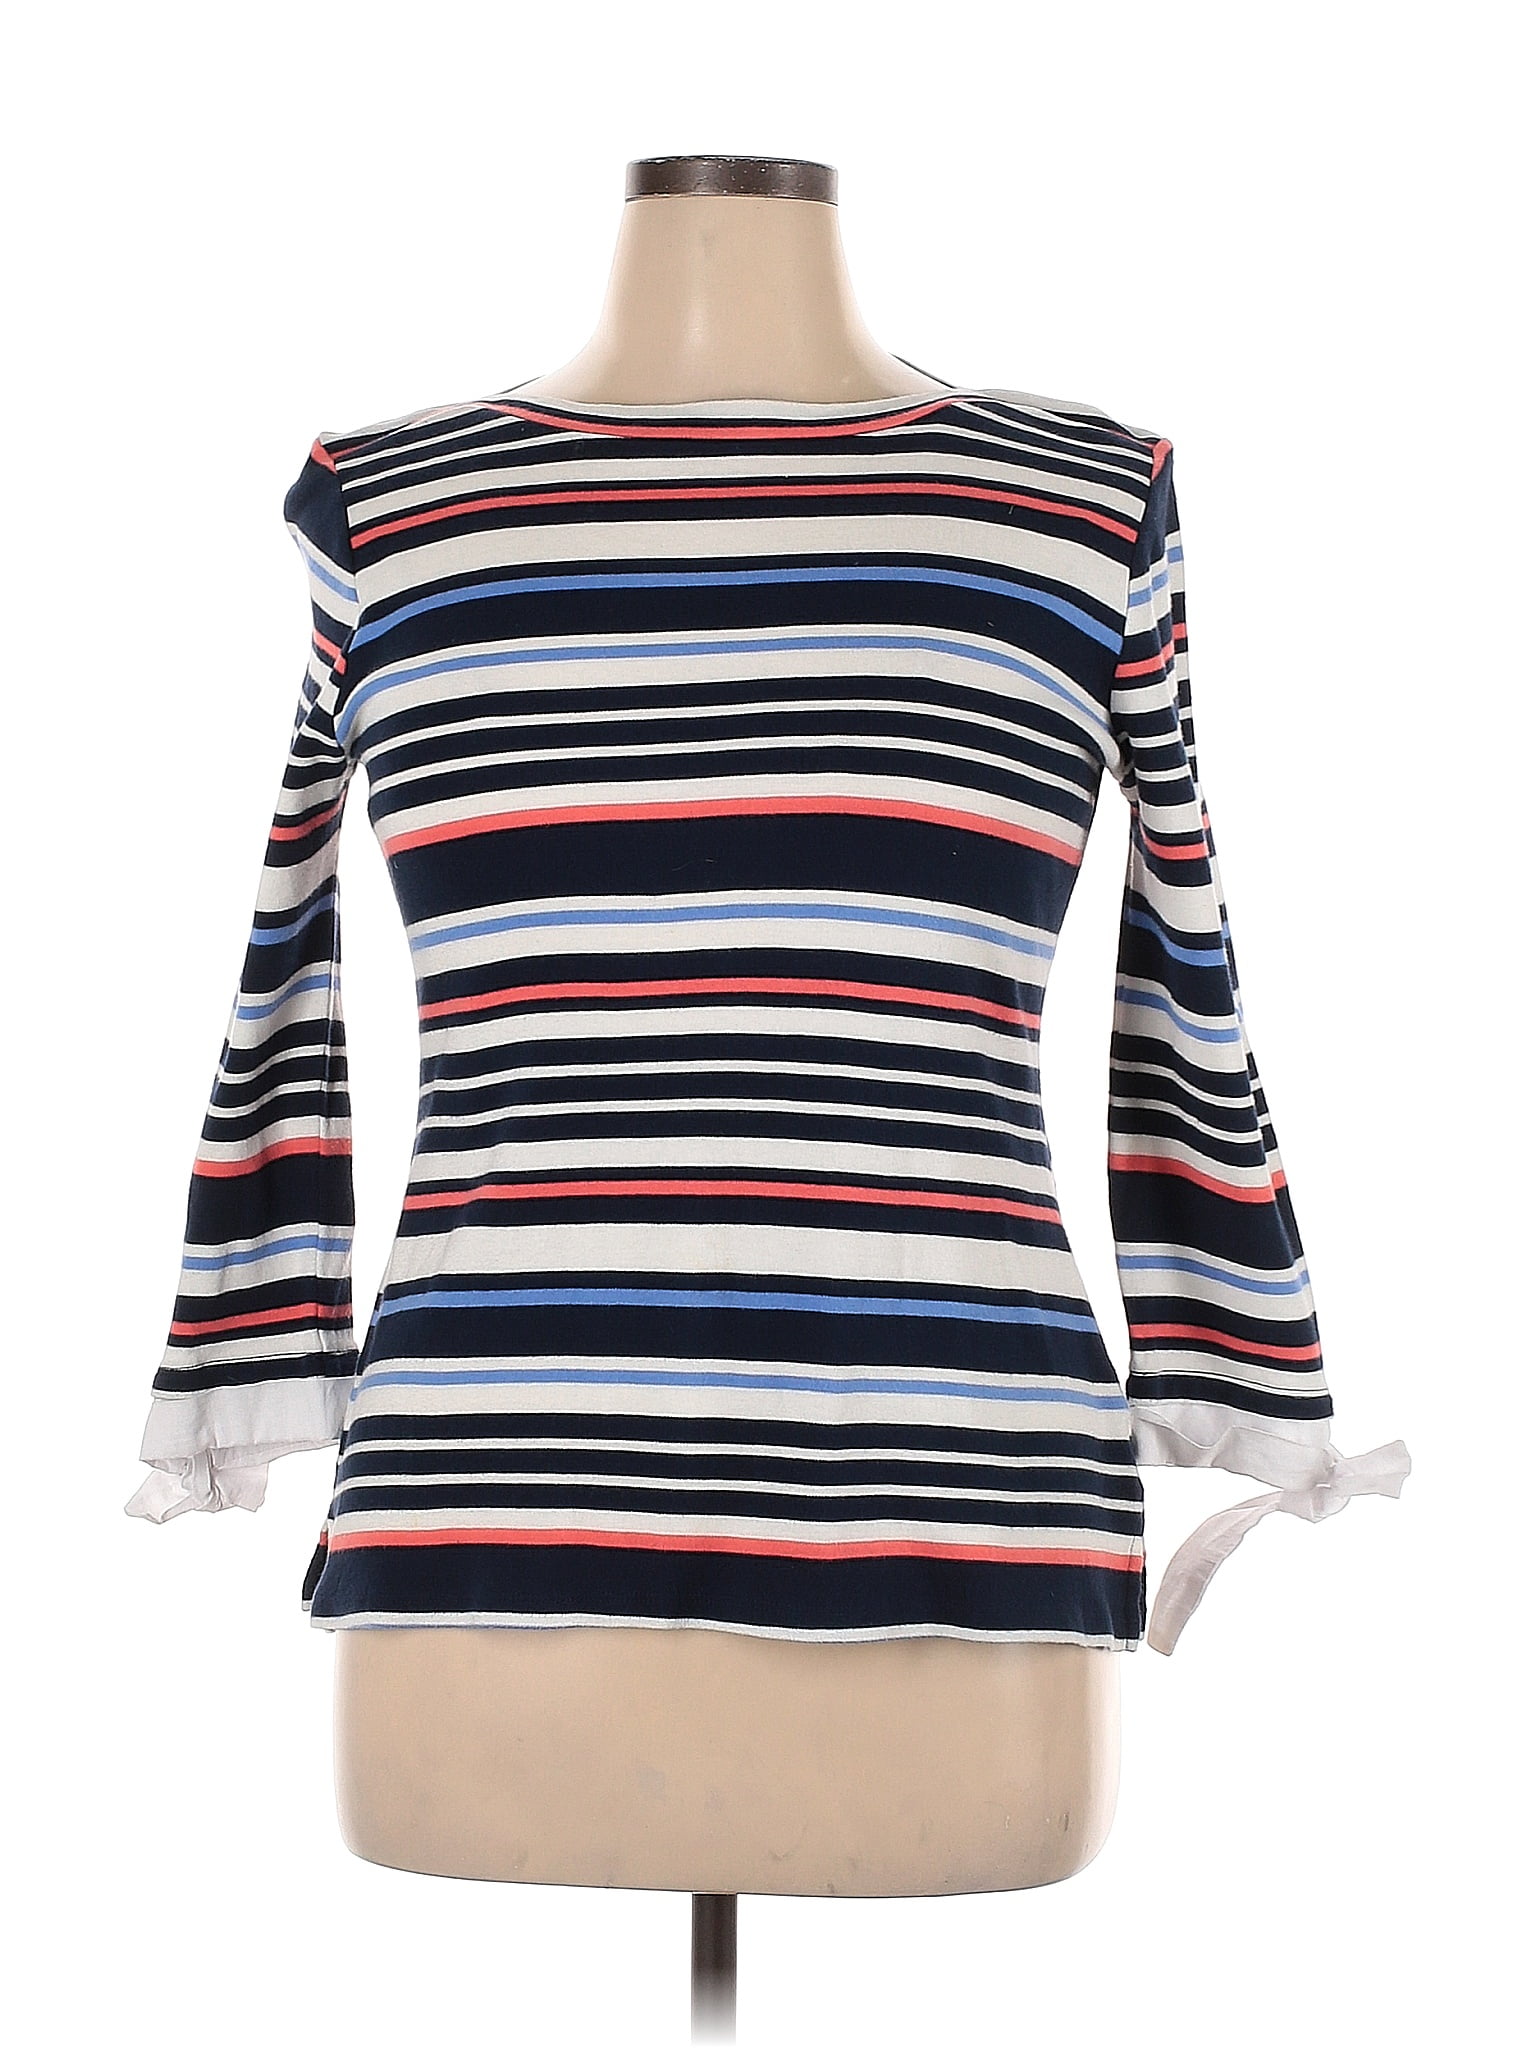 Charter Club 100% Cotton Color Block Stripes Multi Color Blue Pullover Sweater  Size XL (Petite) - 75% off